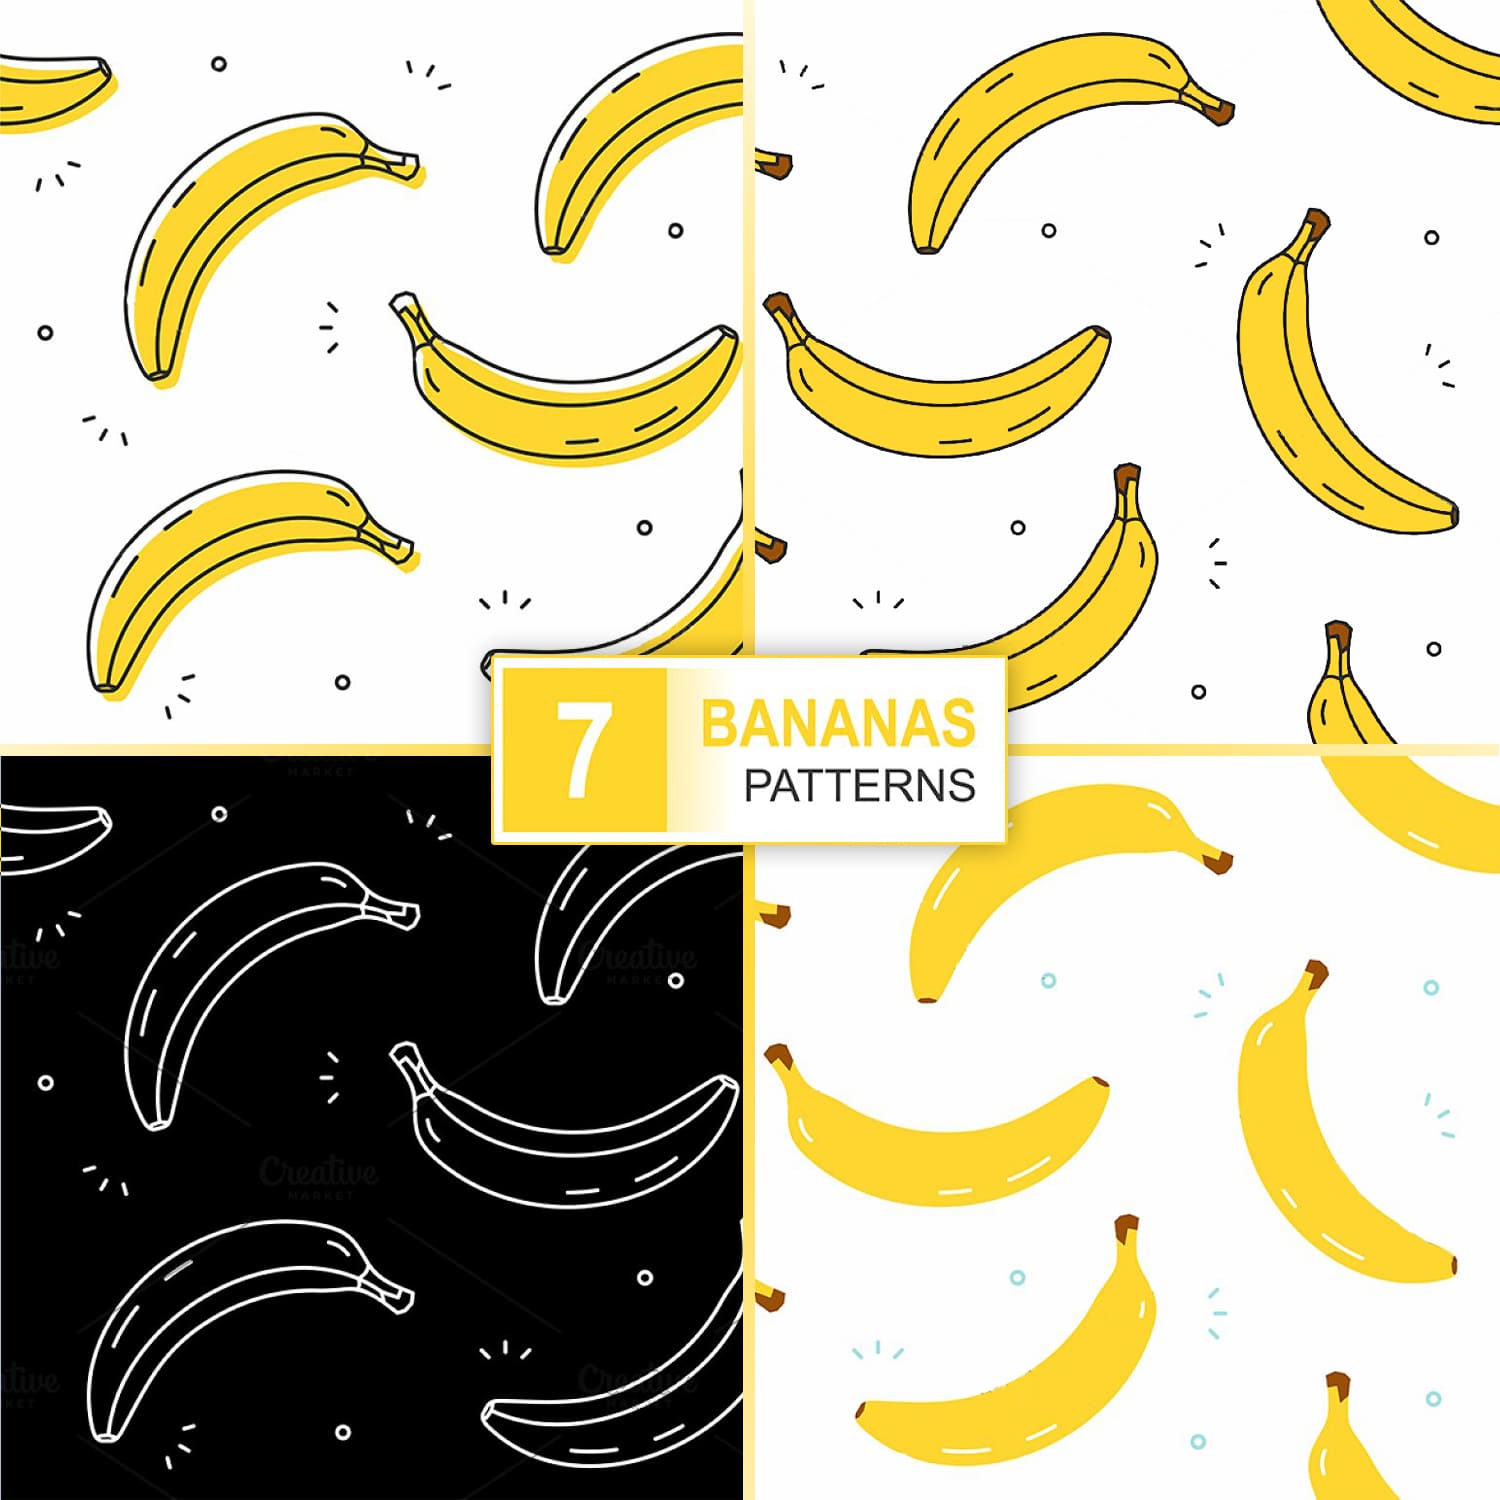 bananas patterns graphics design.